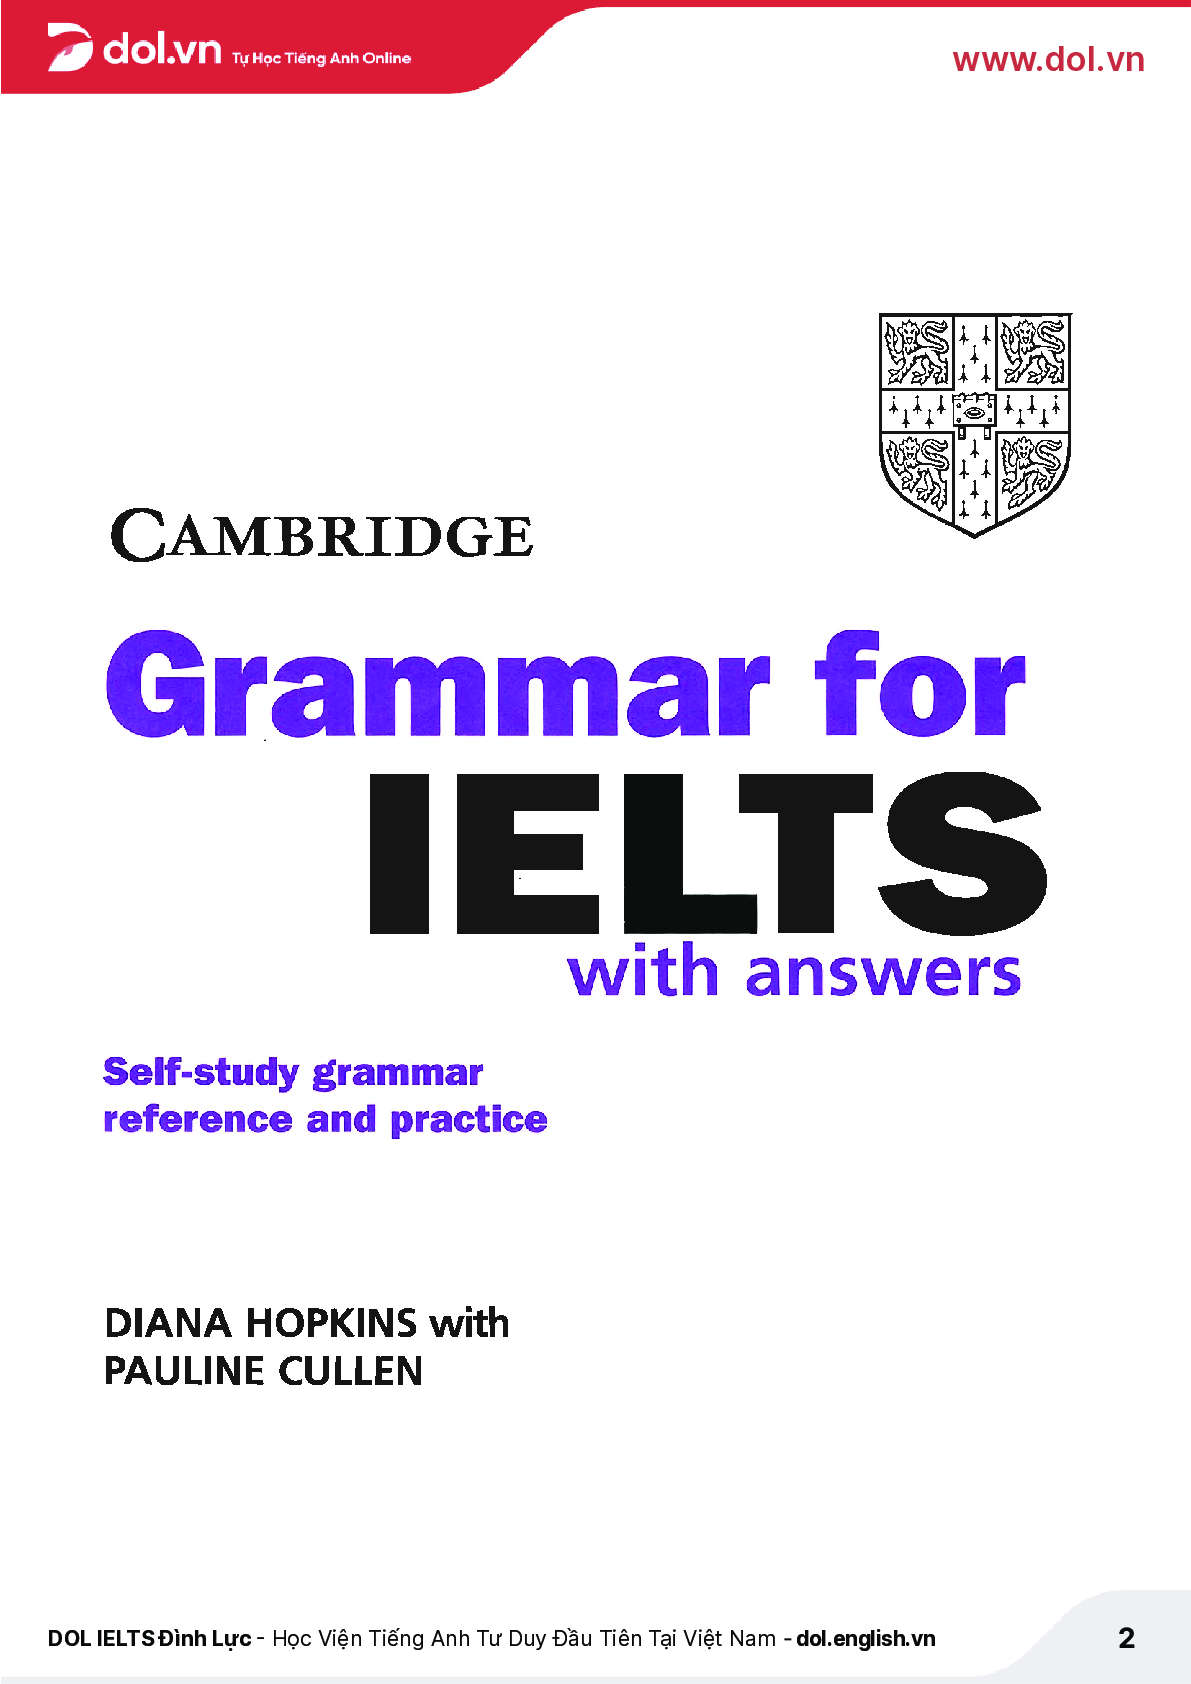 Sách Cambridge Grammar for IELTS pdf | Xem online, tải PDF miễn phí (trang 2)